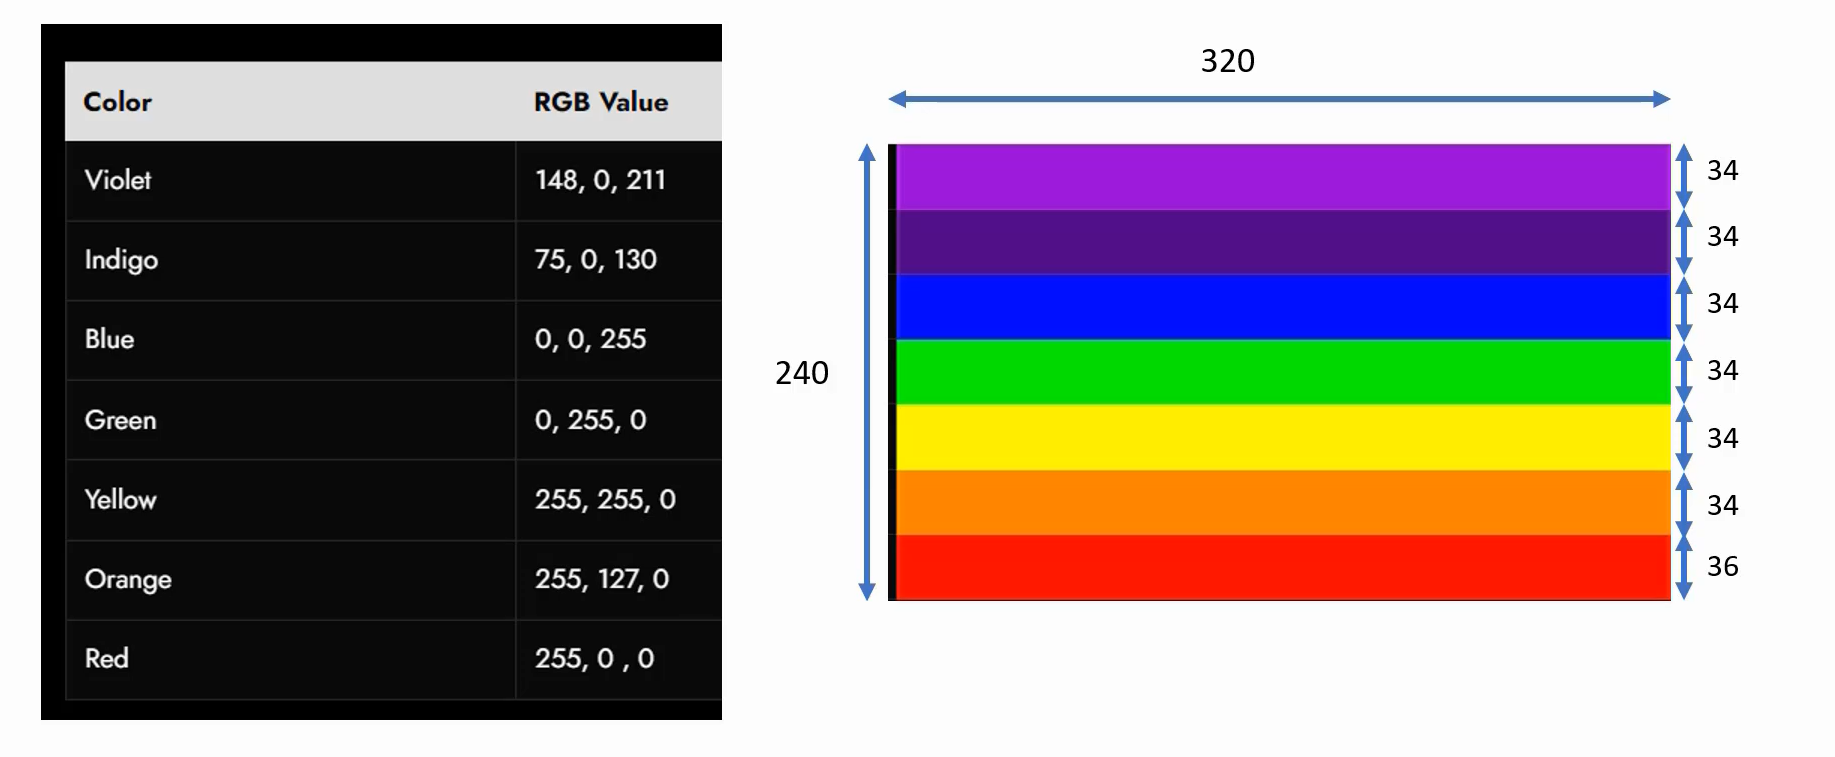 Figure 1. VIBGYOR bars and RGB value